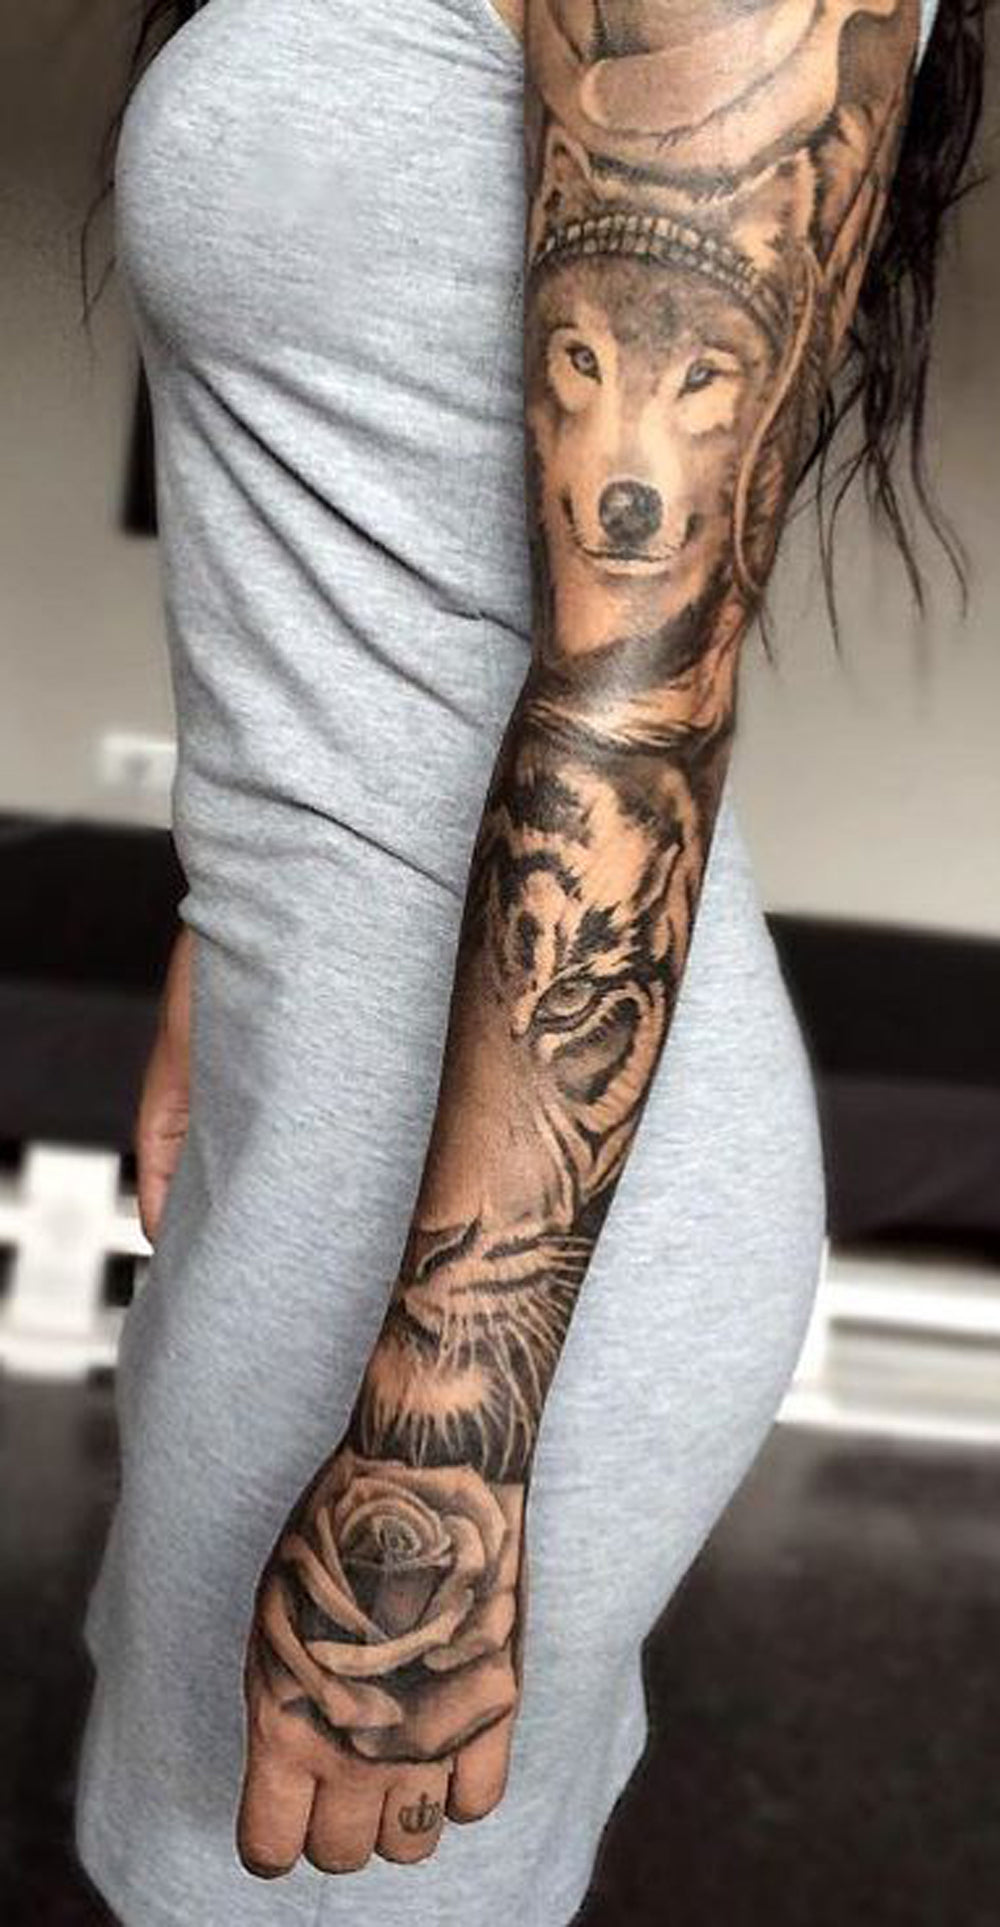 Women's Wolf Tiger Full Arm Sleeve Tattoo Ideas - Floral Flower Hand Tat -  ideas del tatuaje de la manga del brazo completo de la flor del tigre negro del lobo para las mujeres - www.MyBodiArt.com